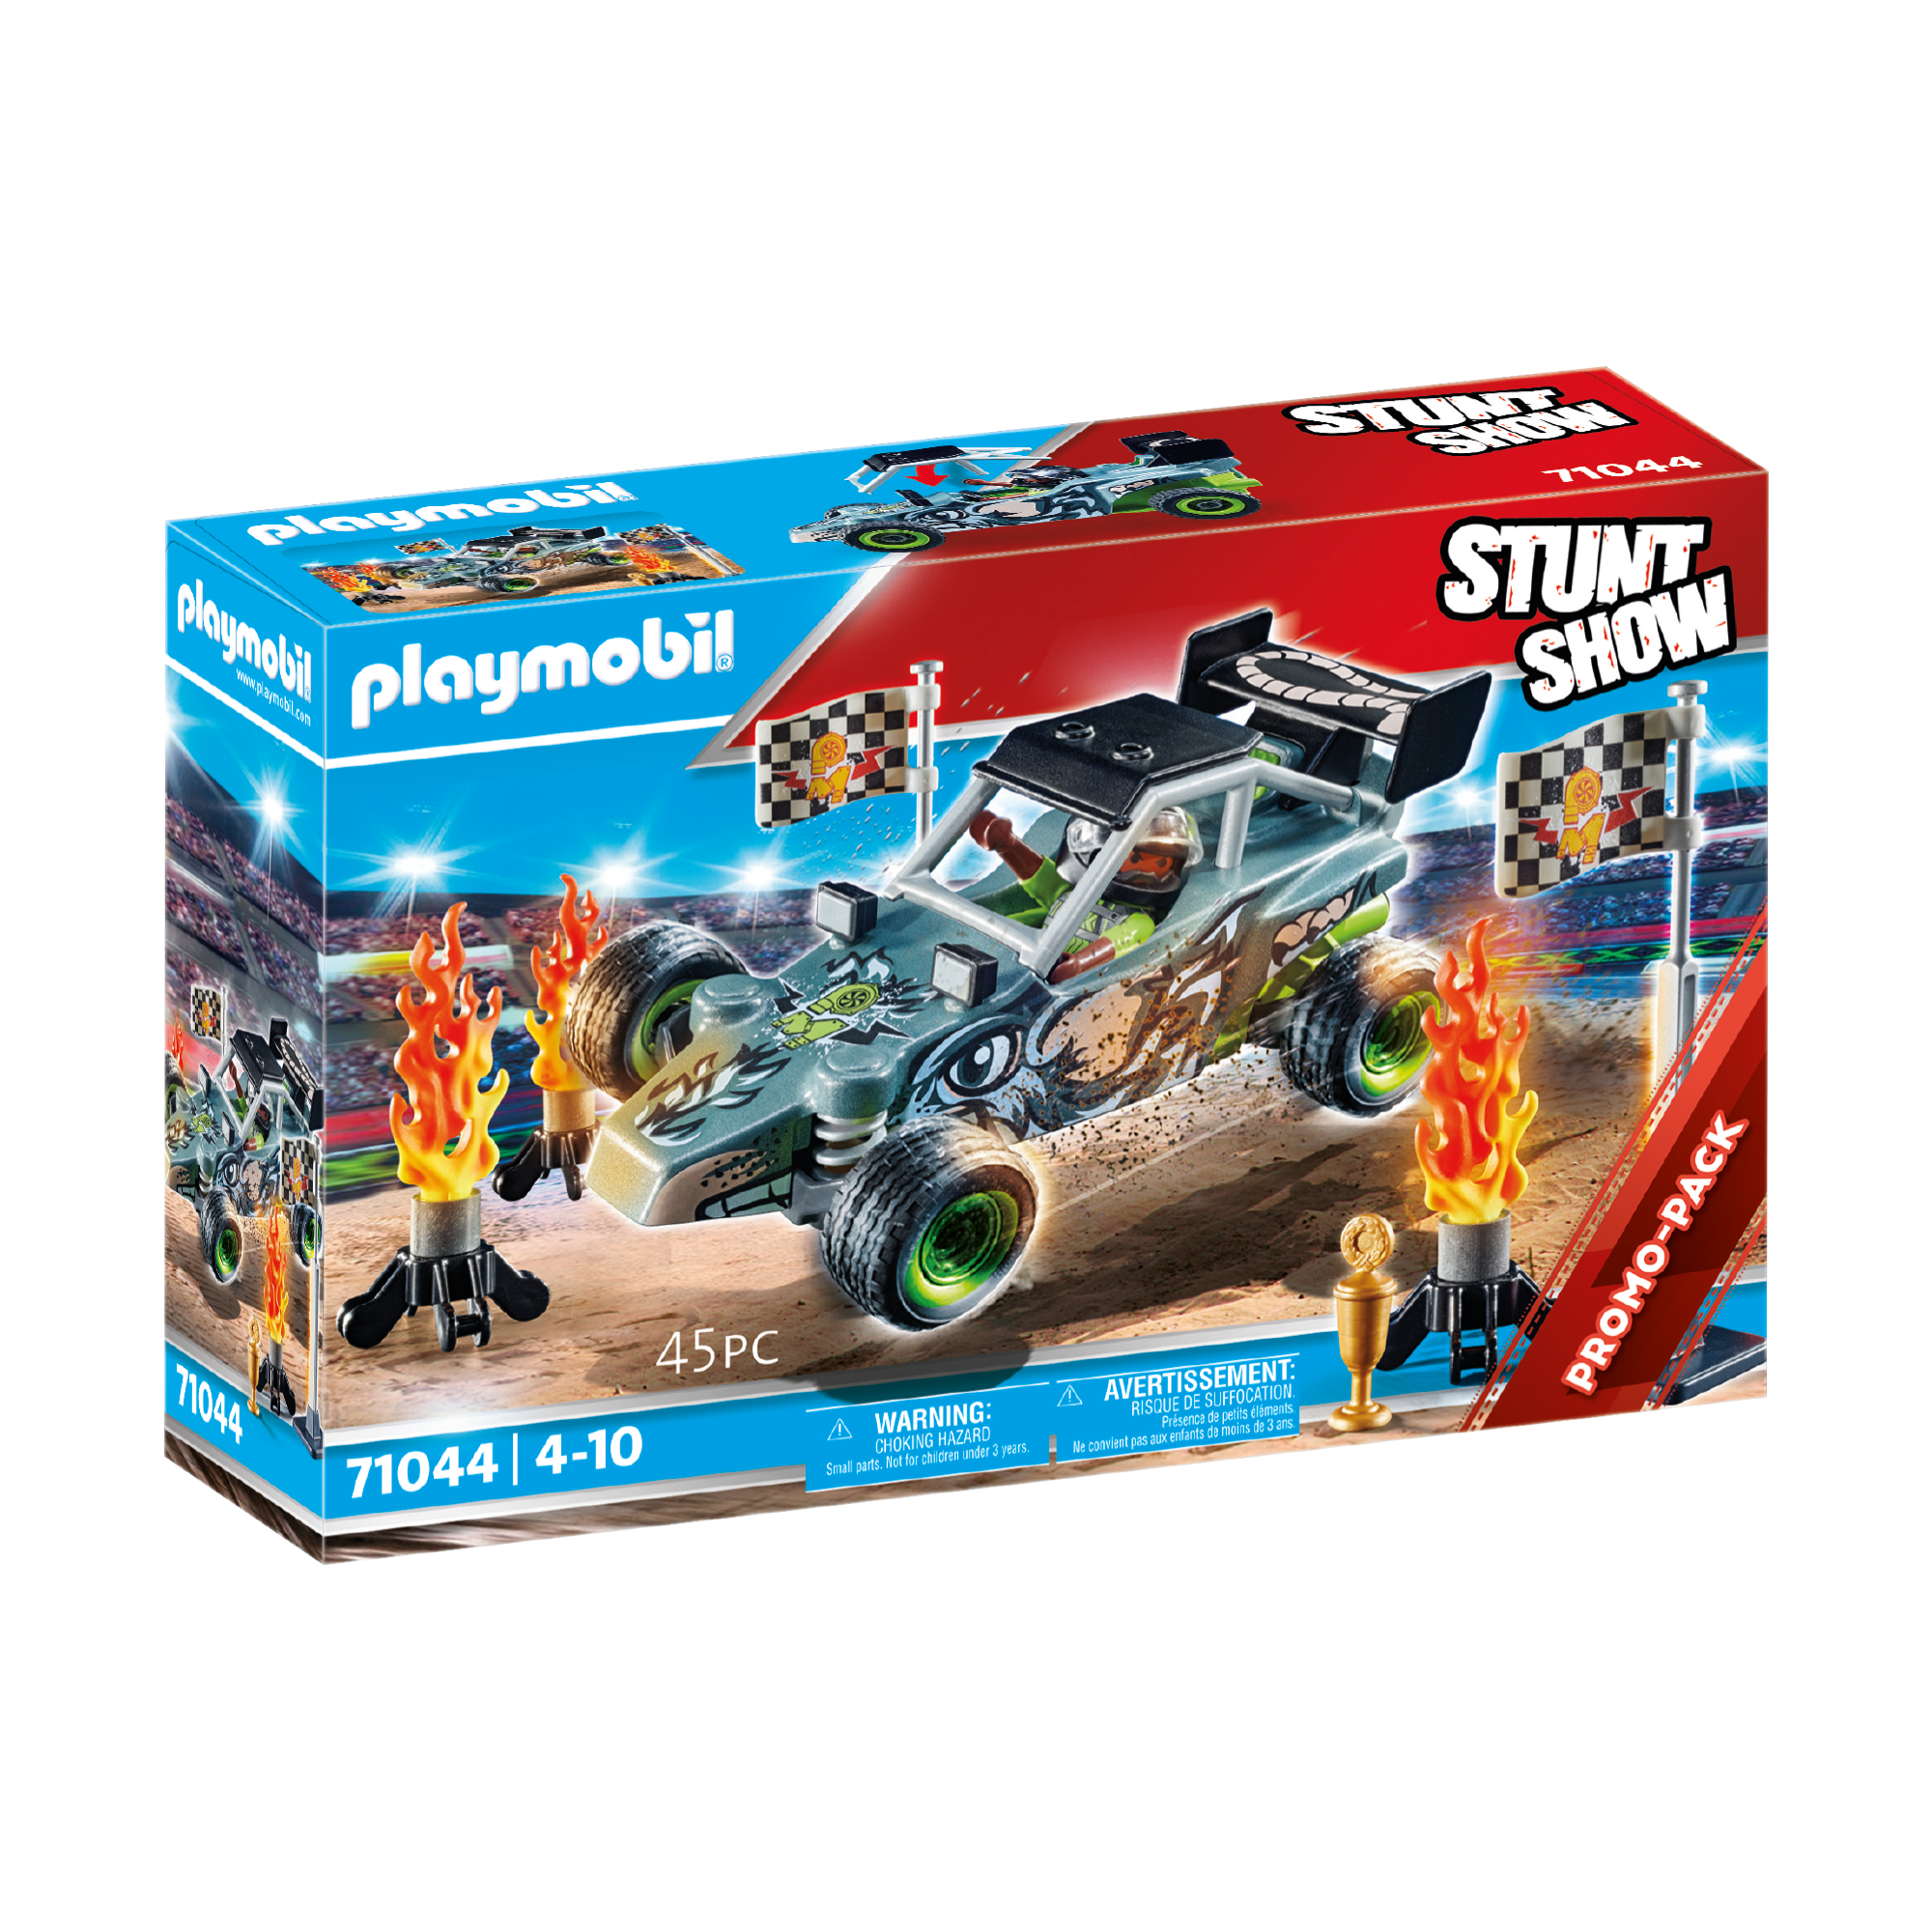 Playmobil-Stunt Show - Stuntshow Racer-71044-Legacy Toys